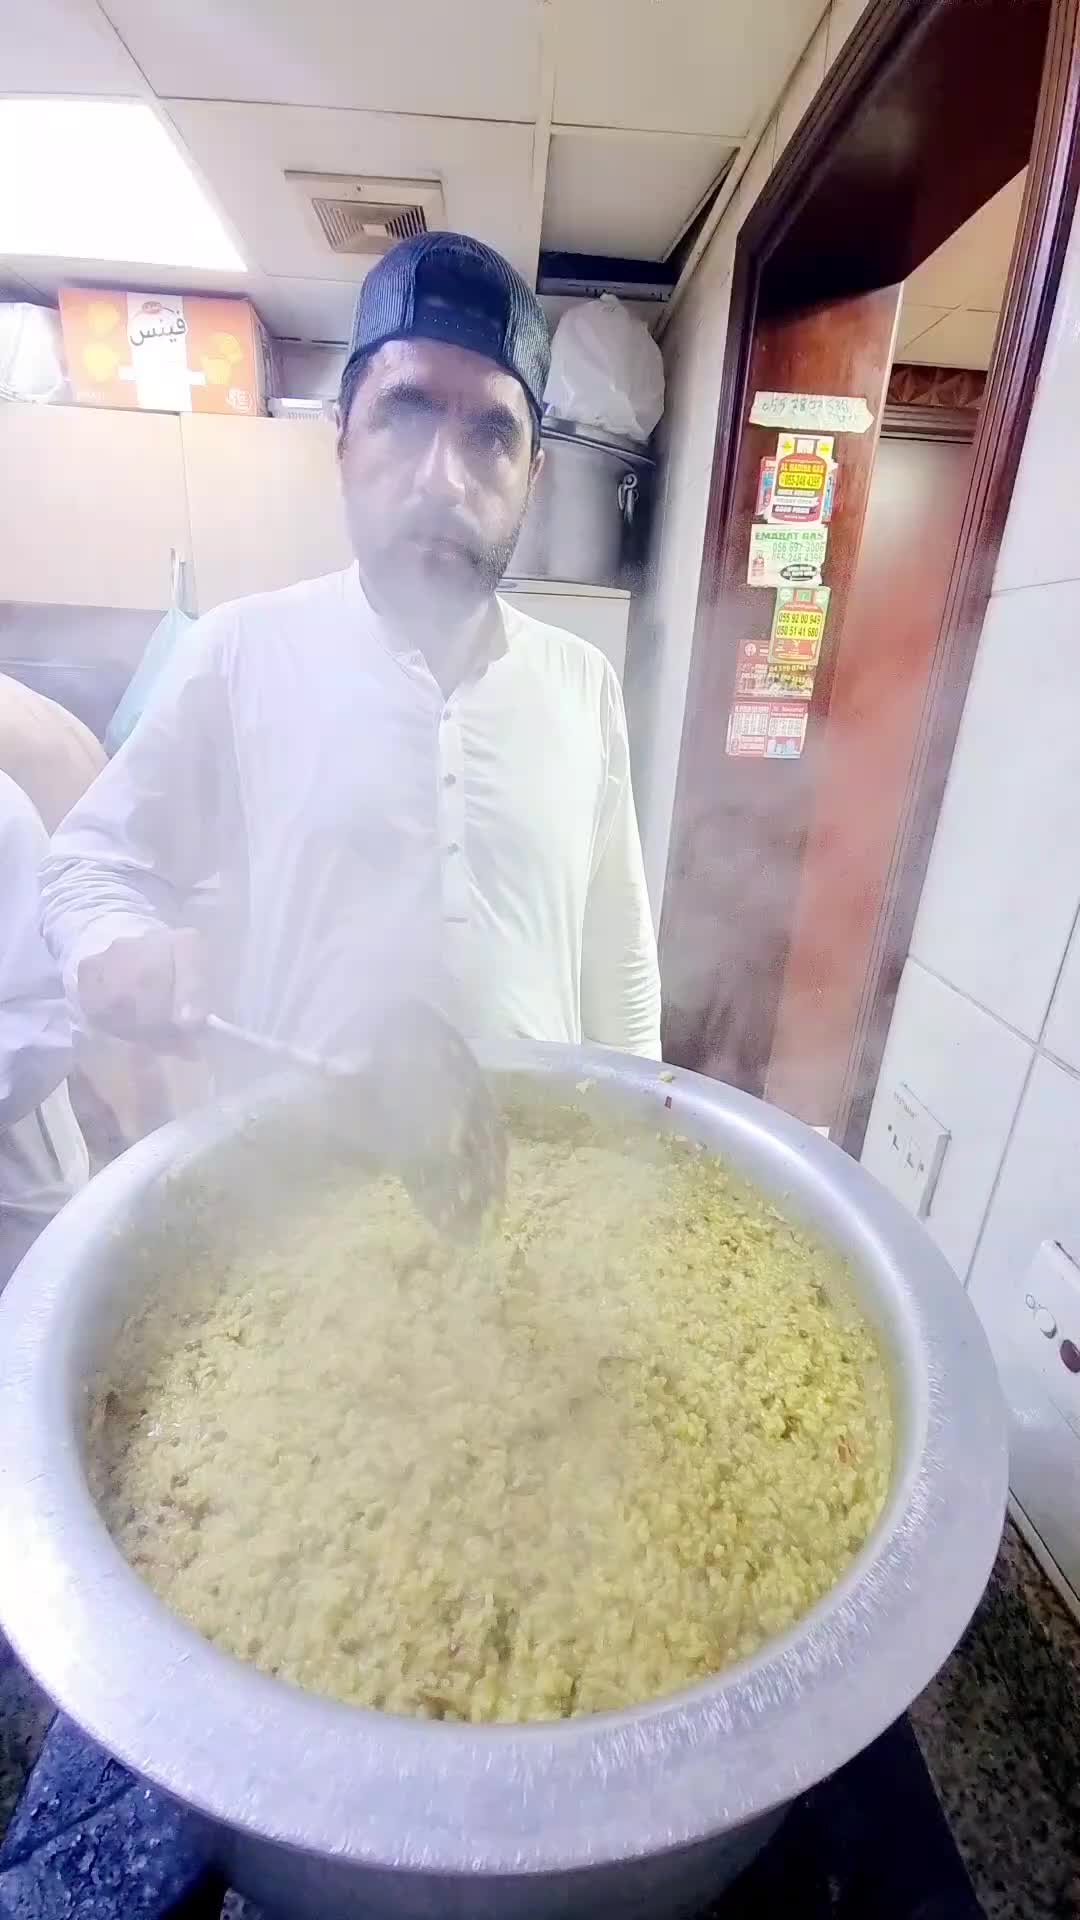 @#50klikes #cookingexpert #dxb #party #charsadawalechawal